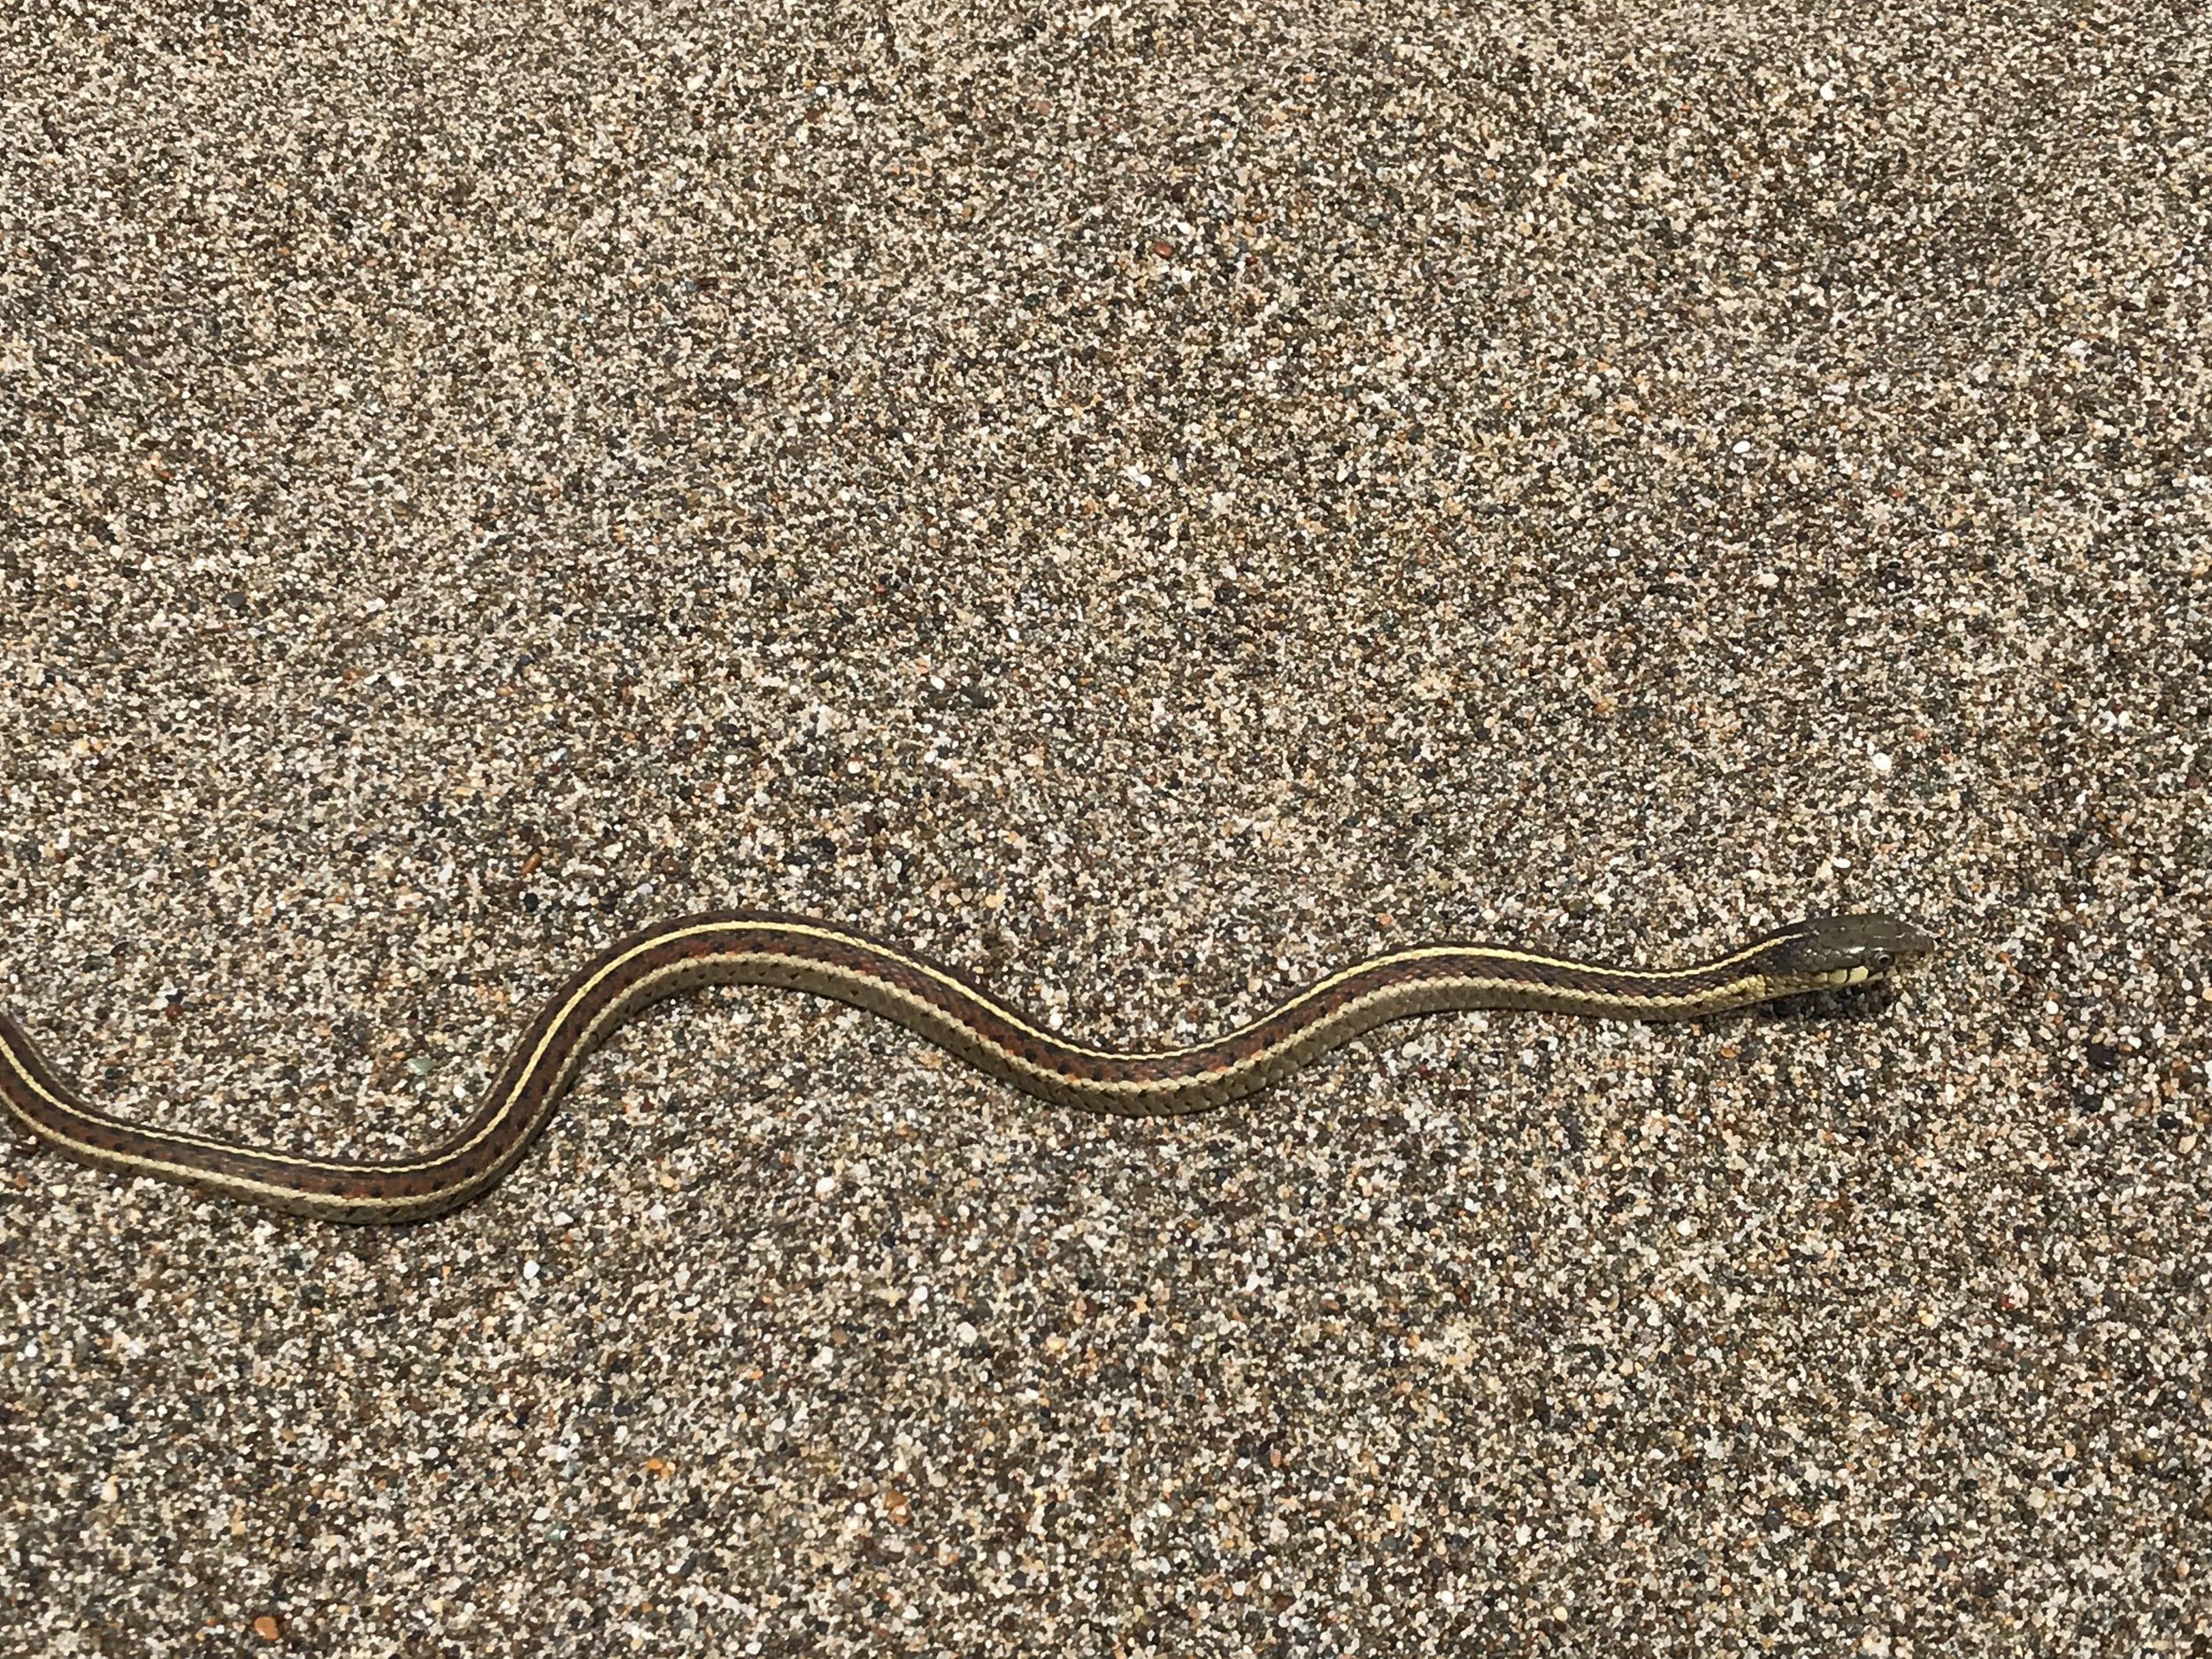 surprise Western Terrestrial Garter snake!